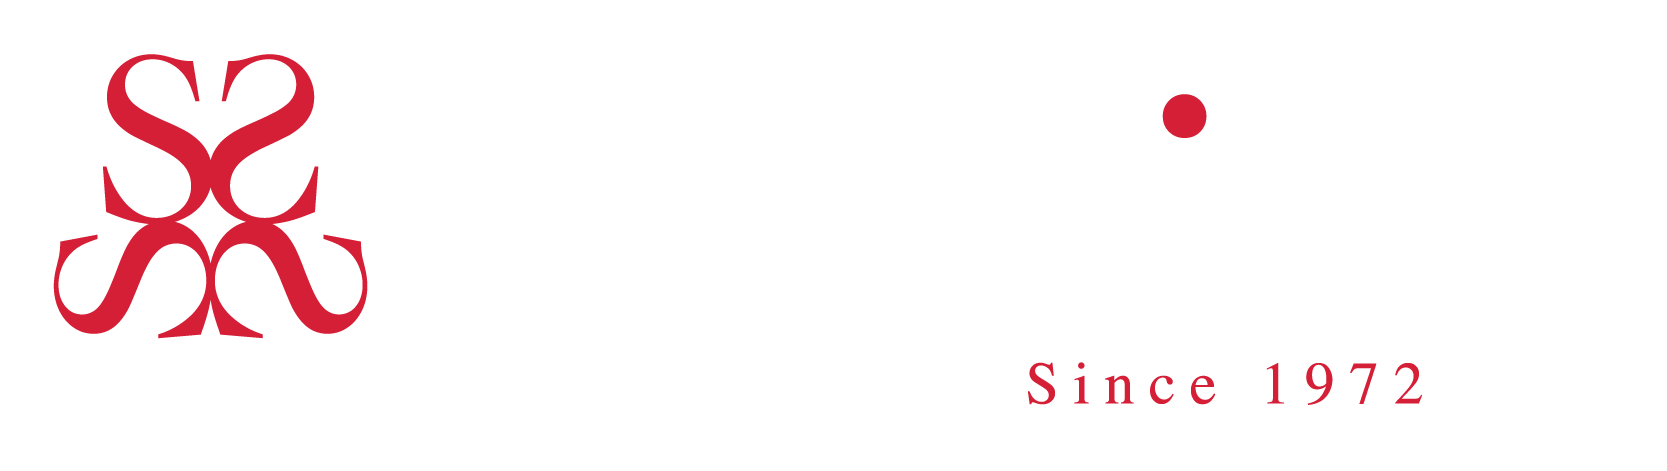 sterlingfx logo